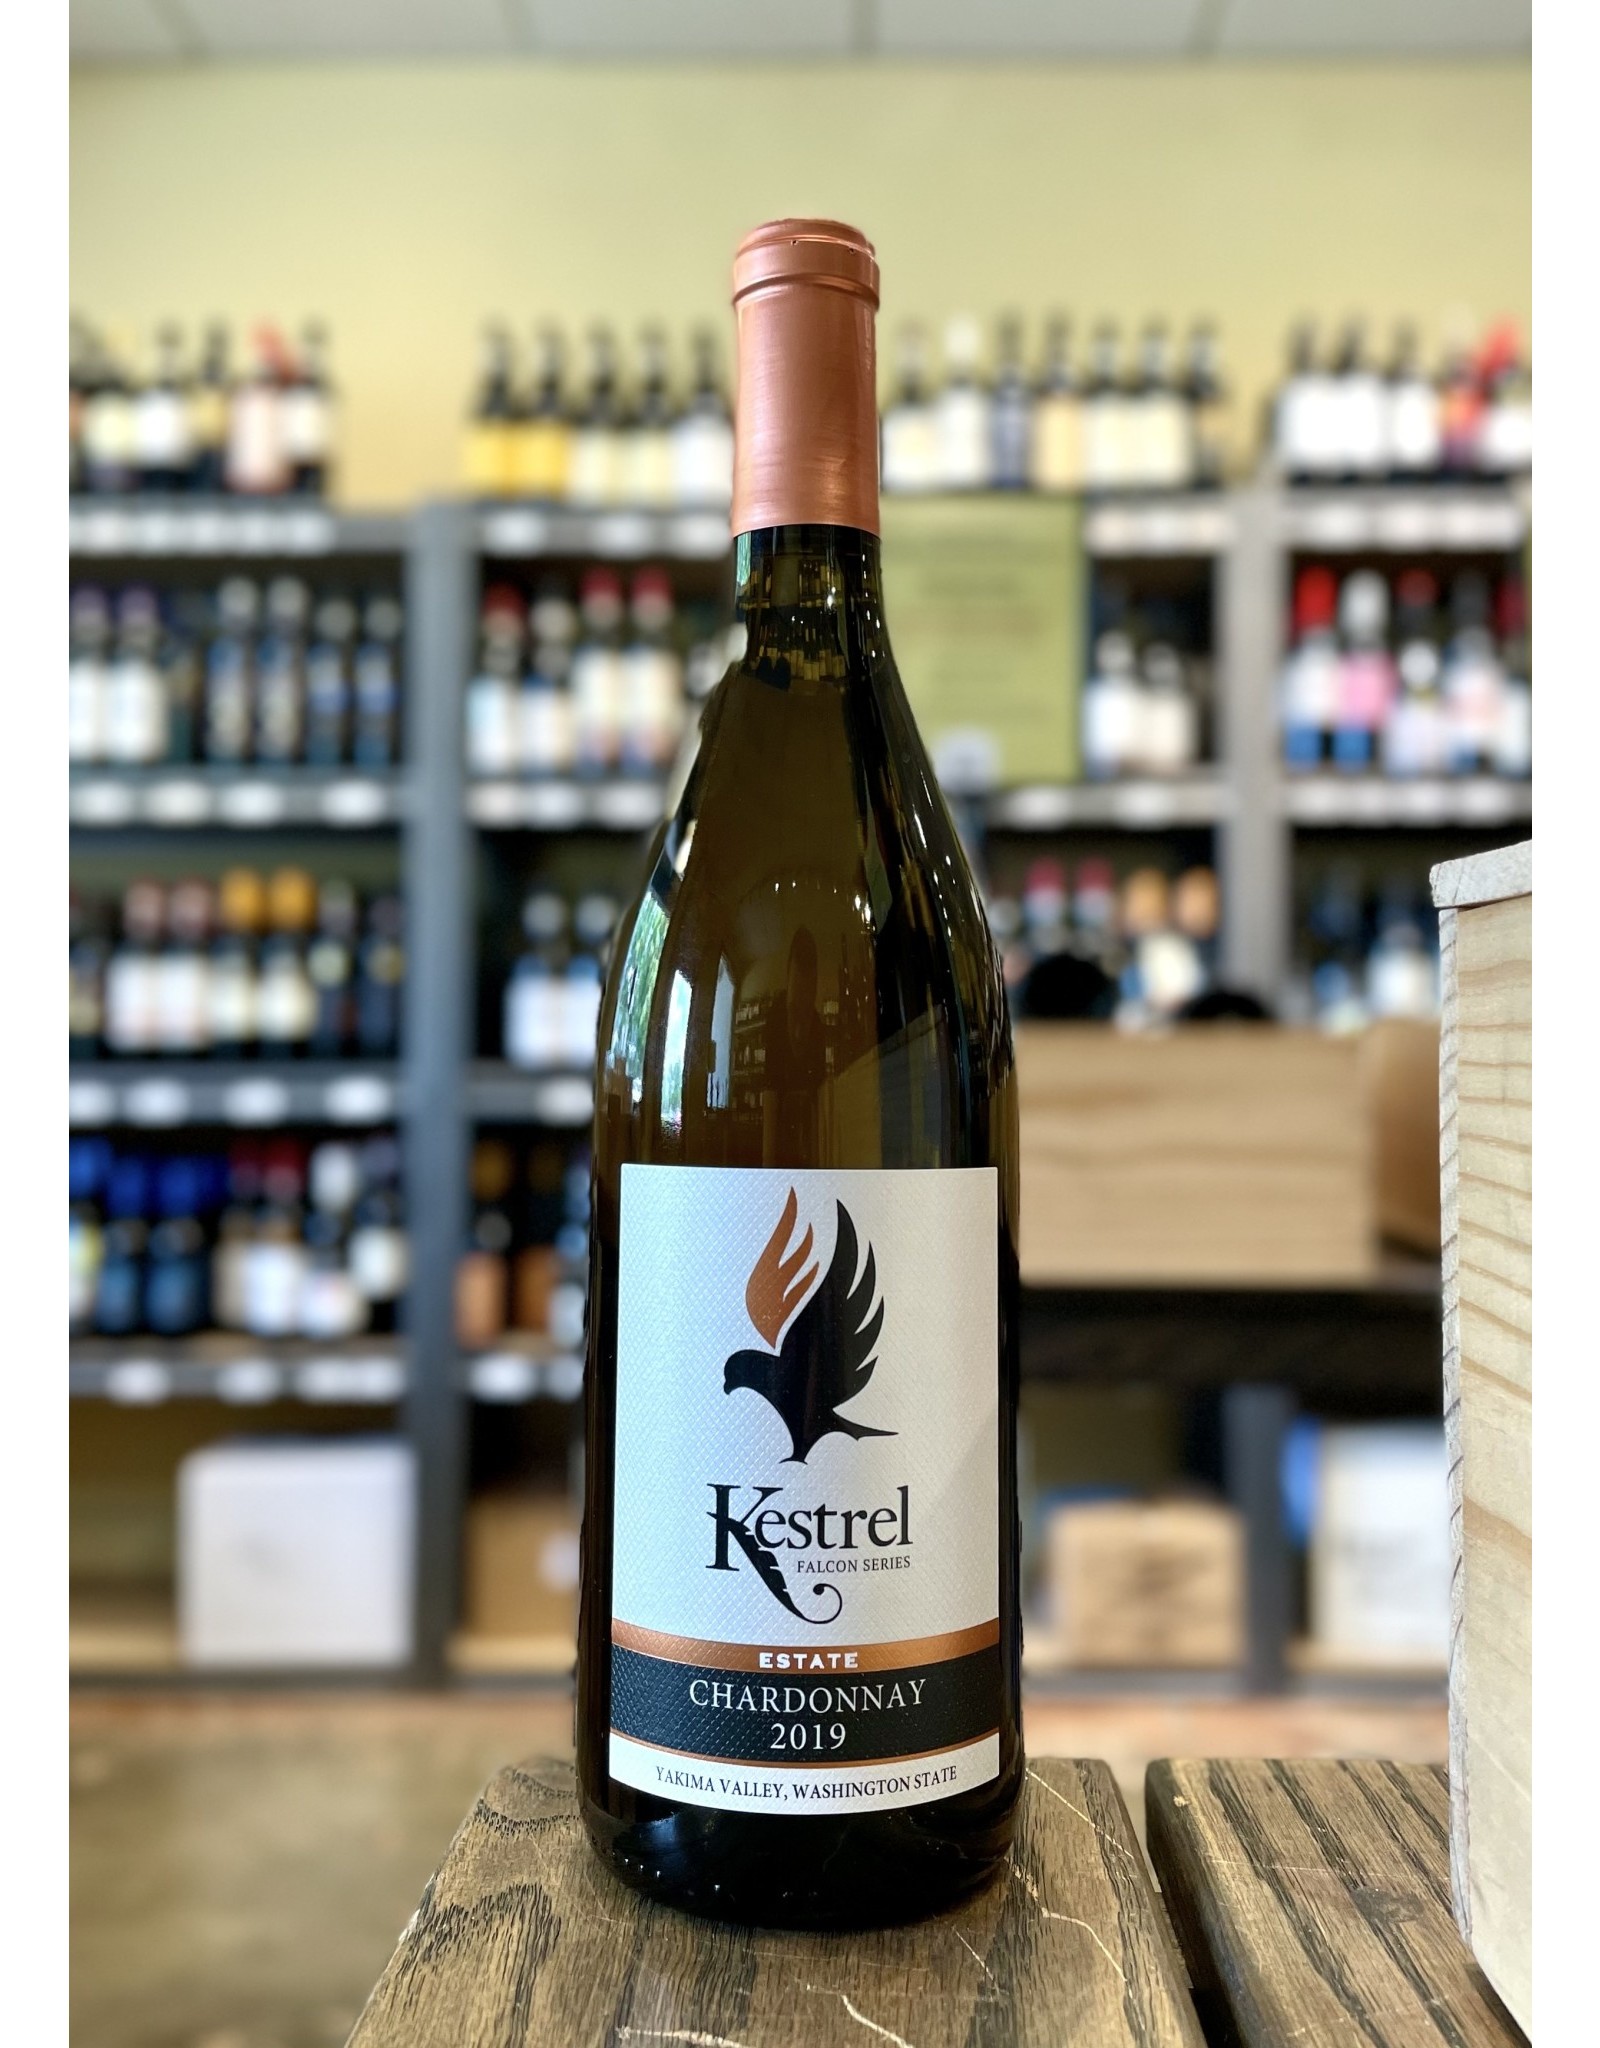 Kestrel Chardonnay 2019